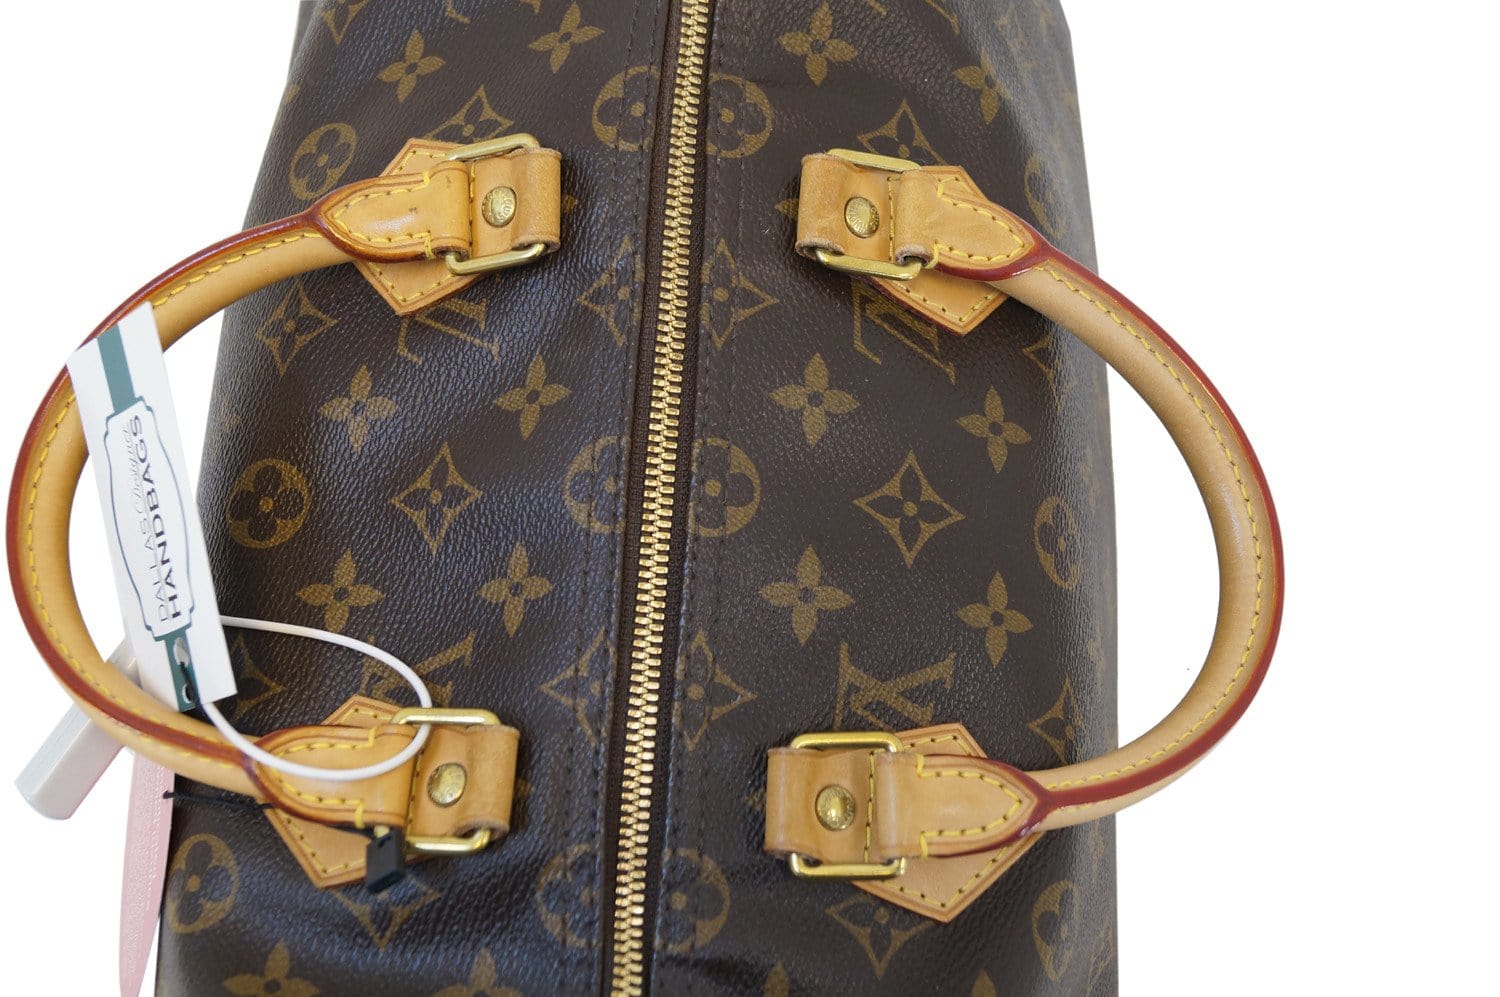 2015 Louis Vuitton Damier Speedy 35 STRAP Bandouliere Bag $1960+